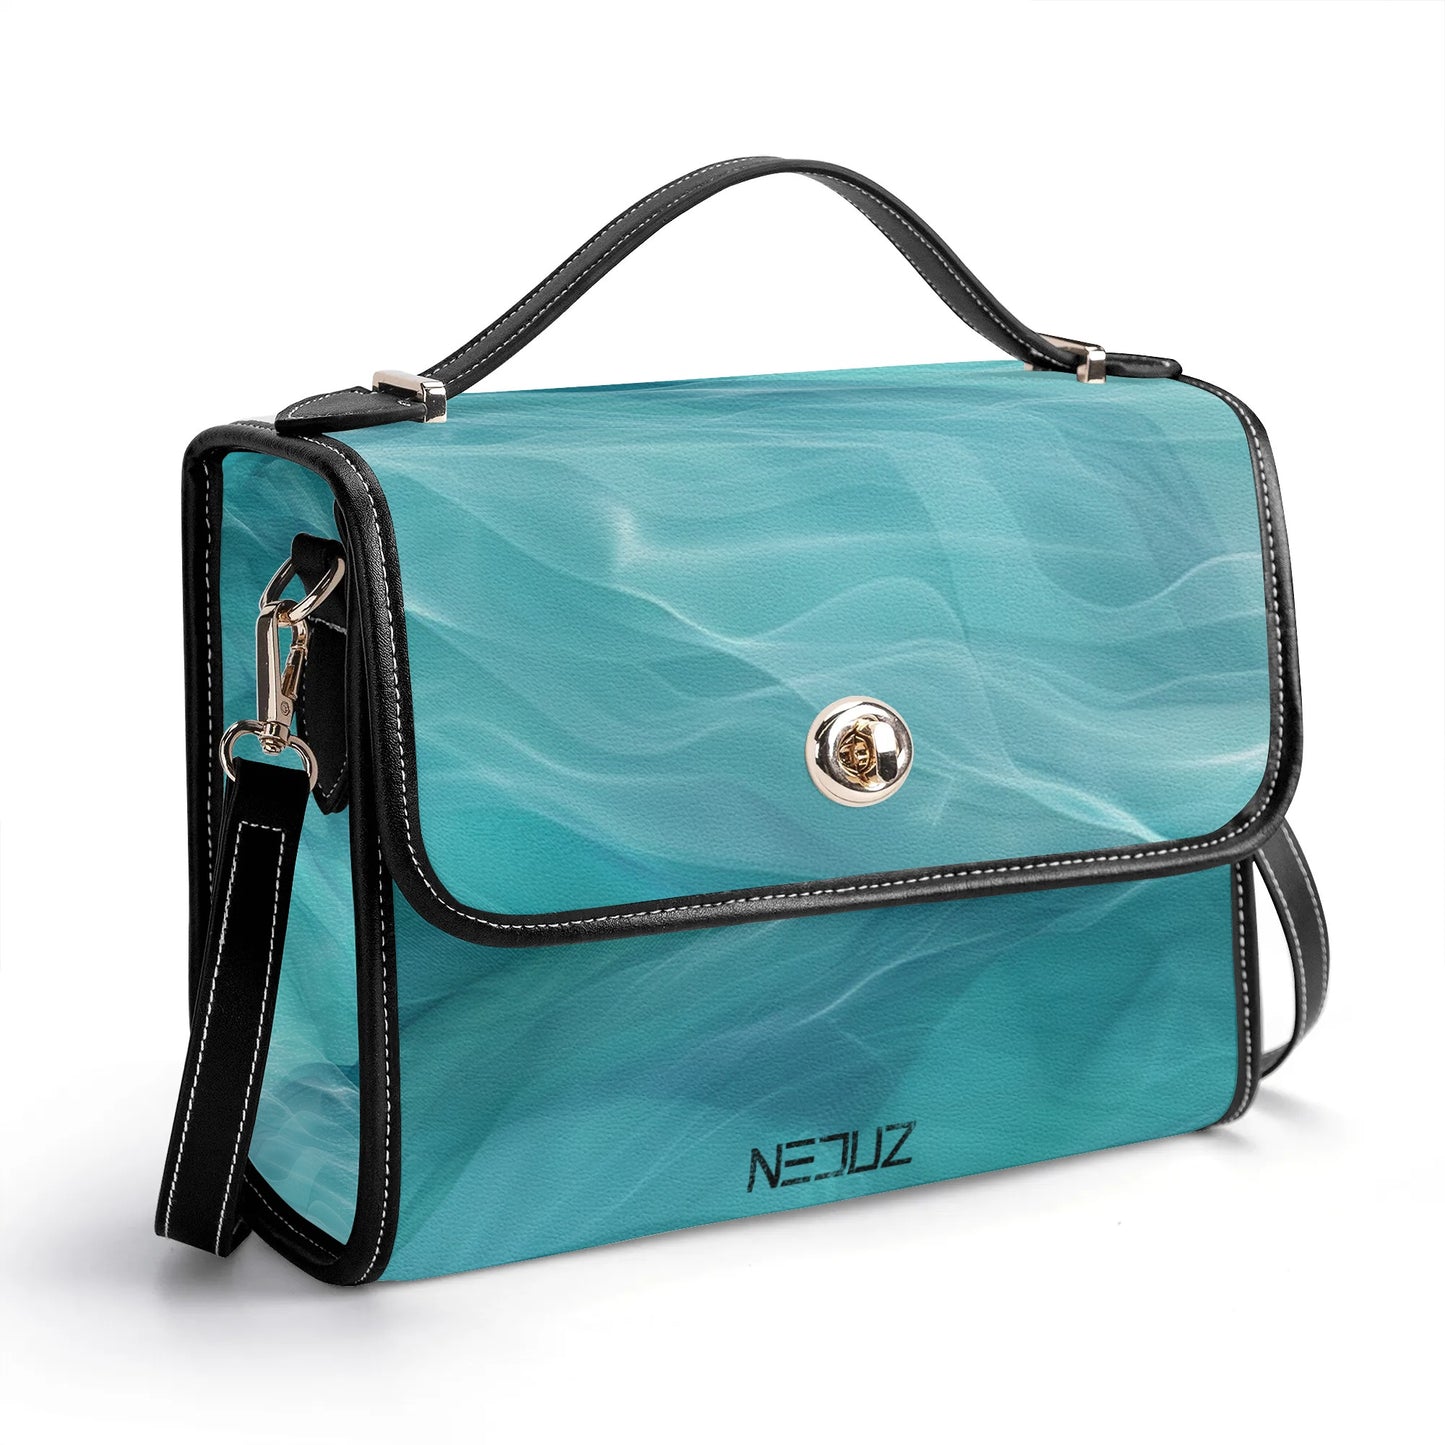 Neduz Elements Flow PU Leather Satchel Bag